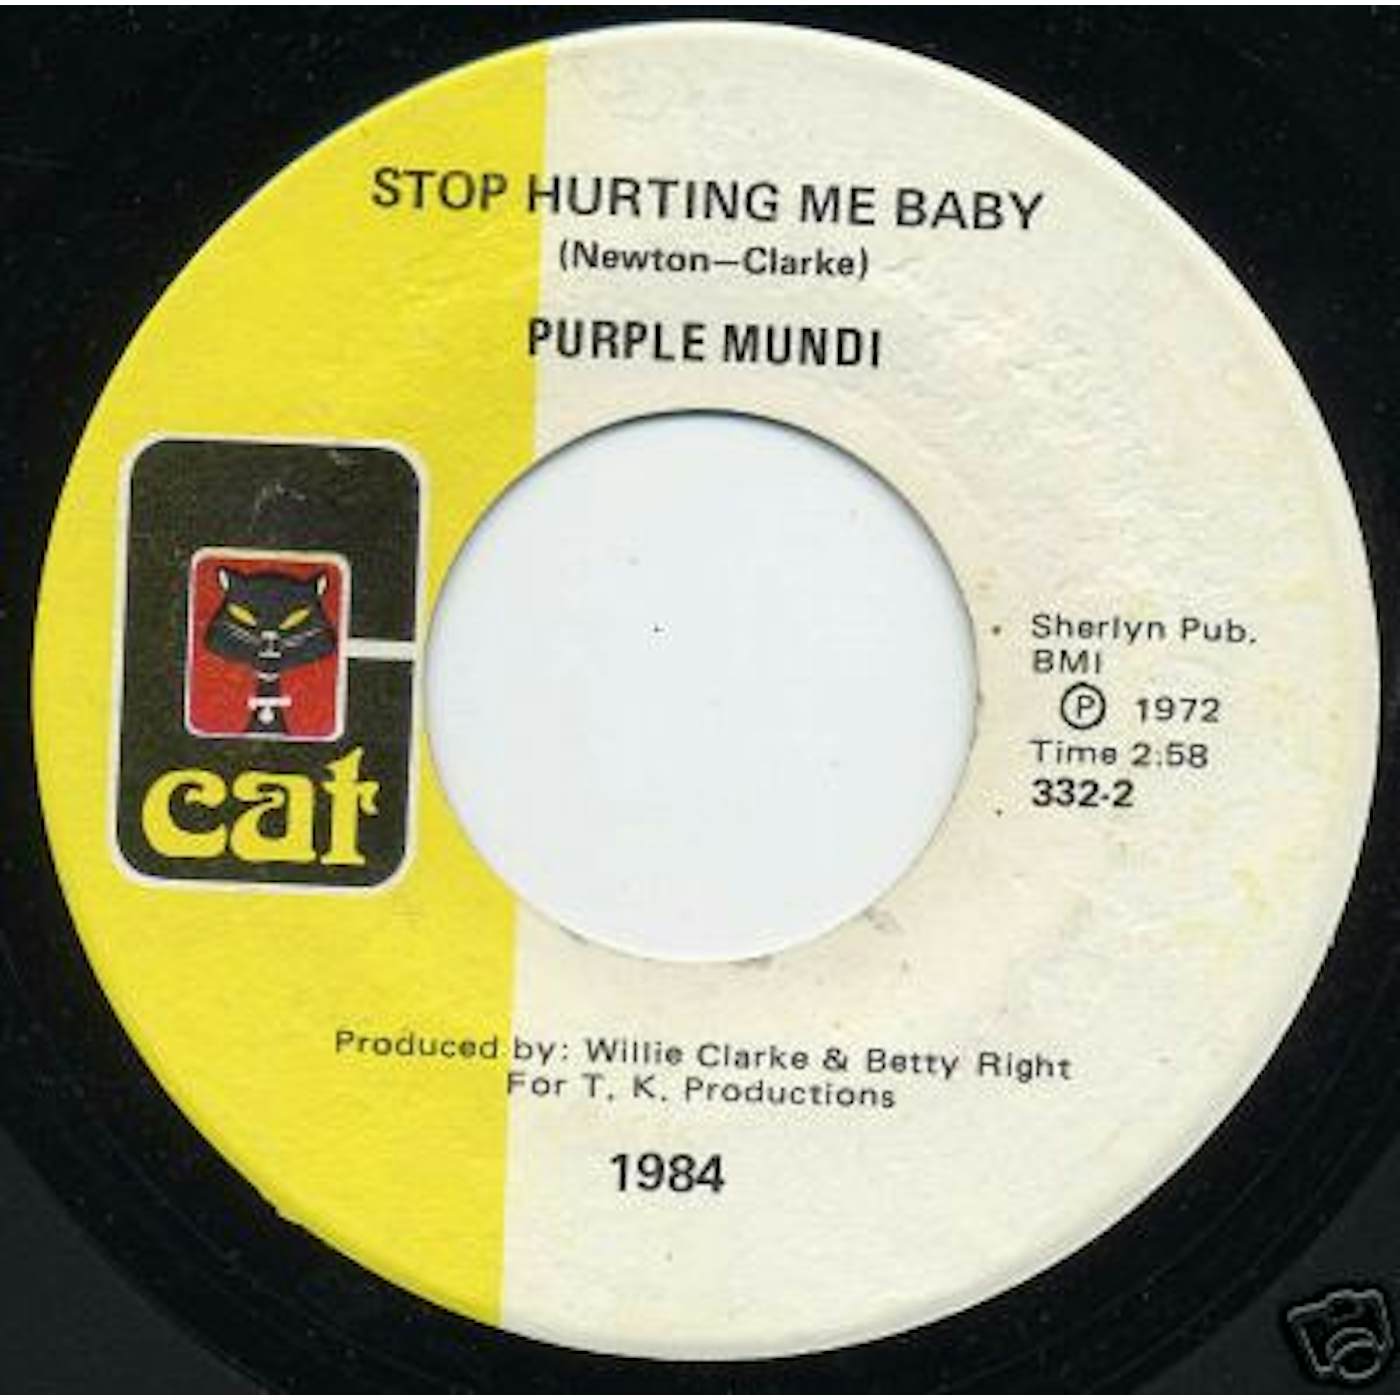 Purple Mundi STOP HURTING ME BABY Vinyl Record